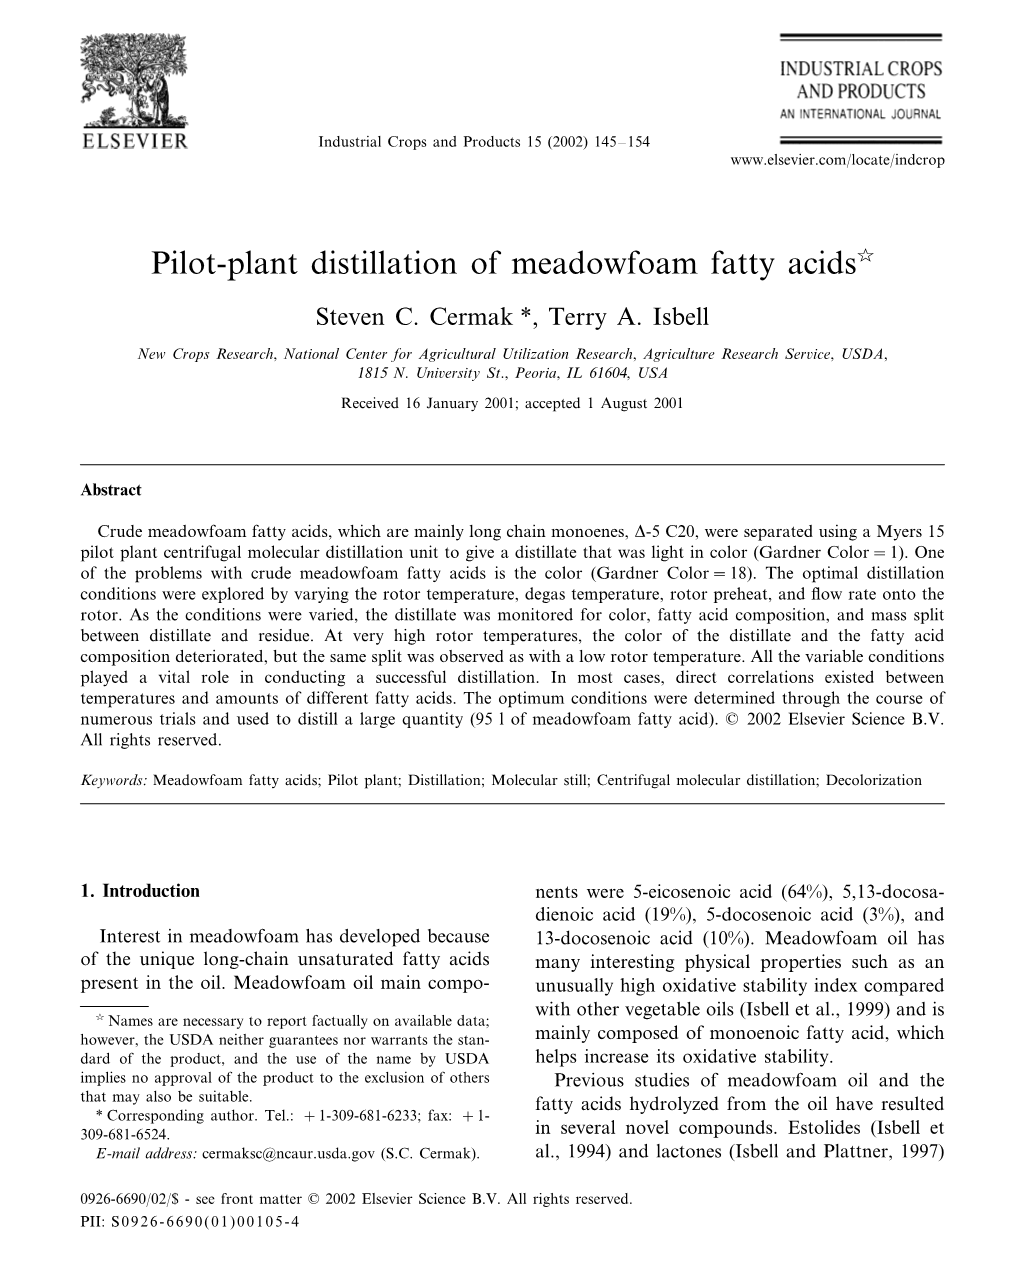 Pilot-Plant Distillation of Meadowfoam Fatty Acids